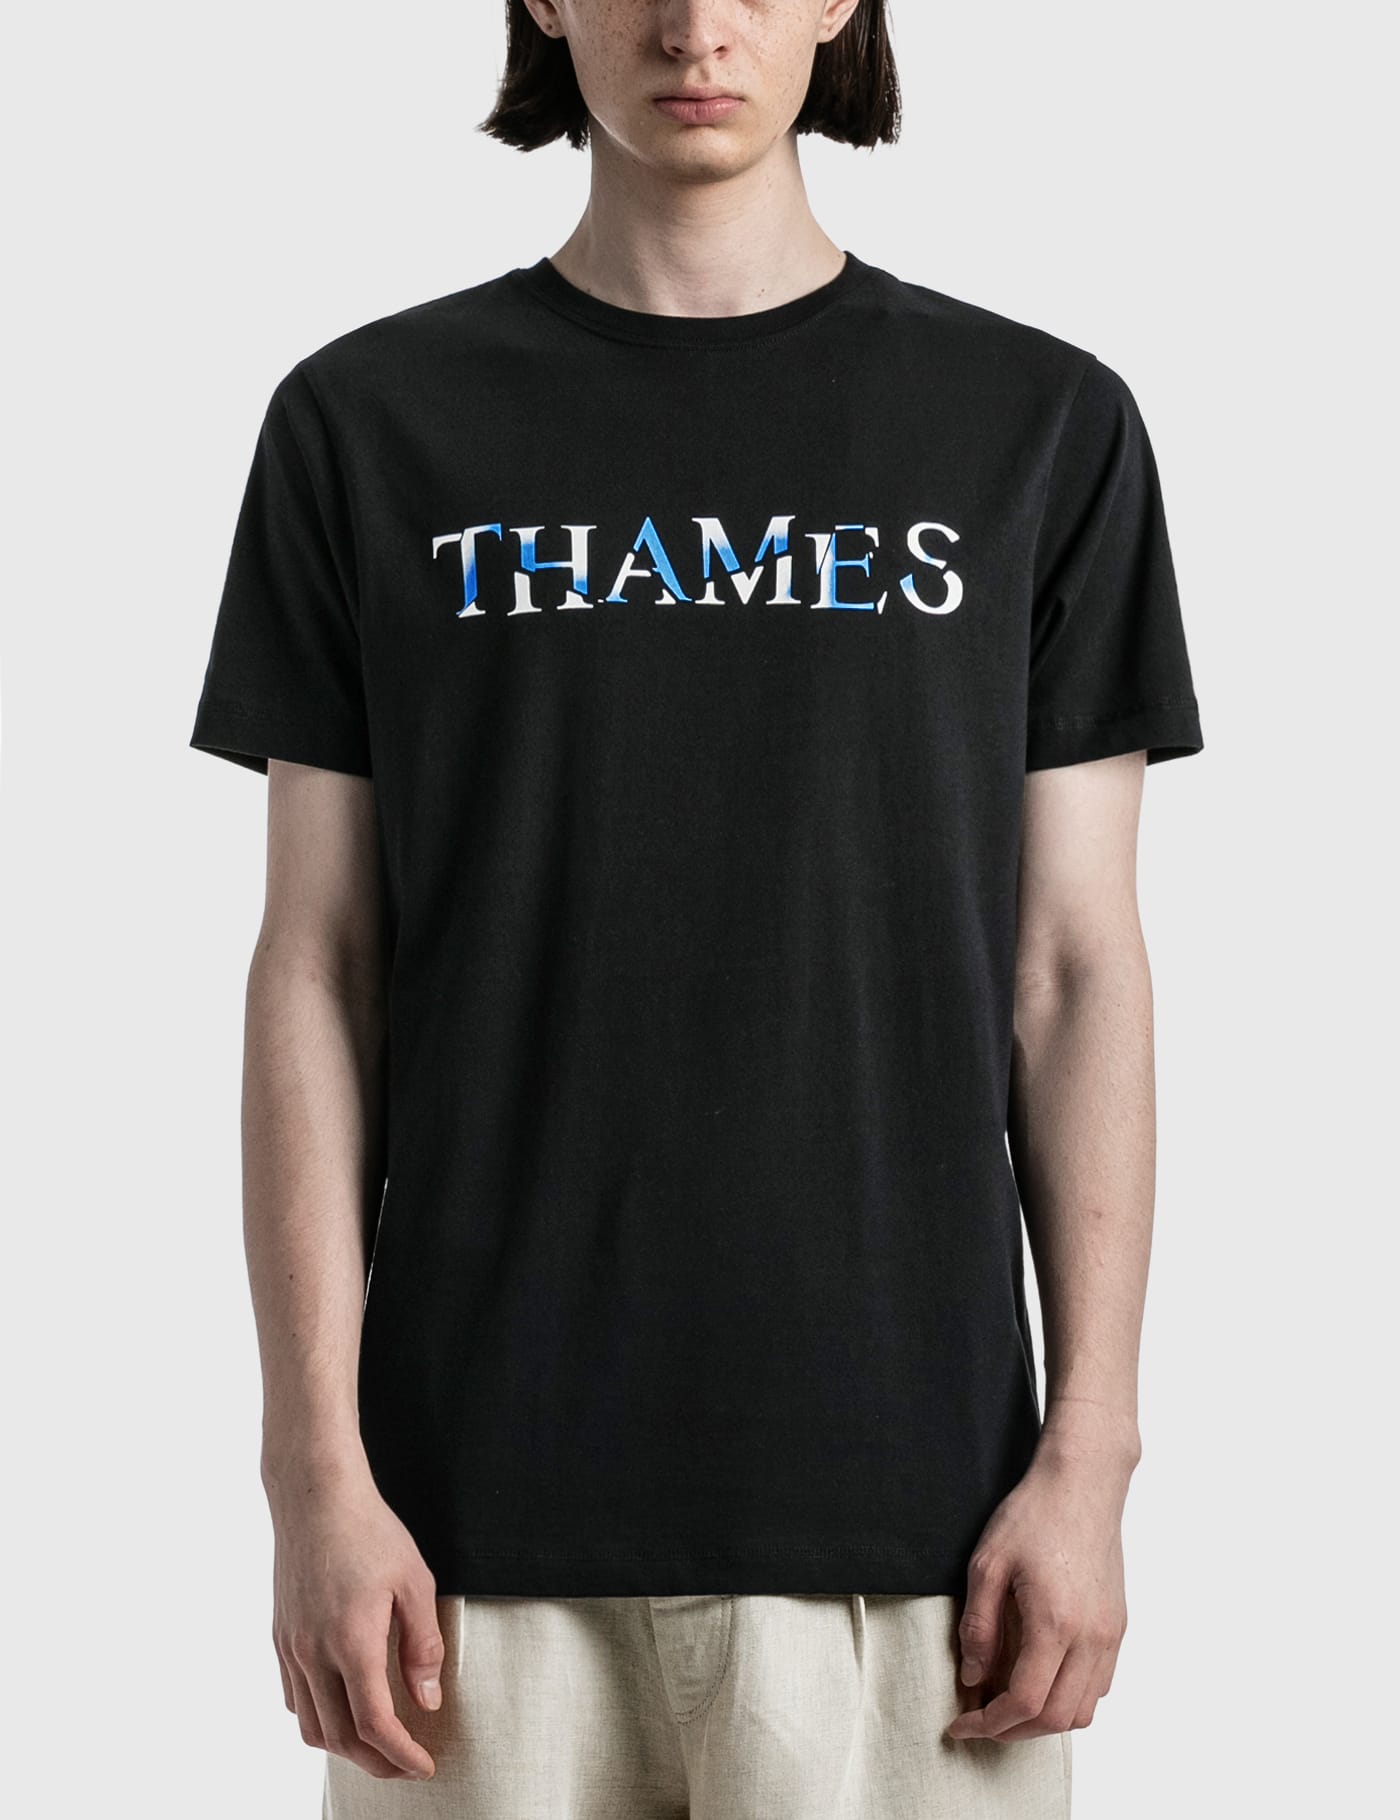 THAMES MMXX. テムズ P.G.Shirt シャツ ホワイト&イエロー - www